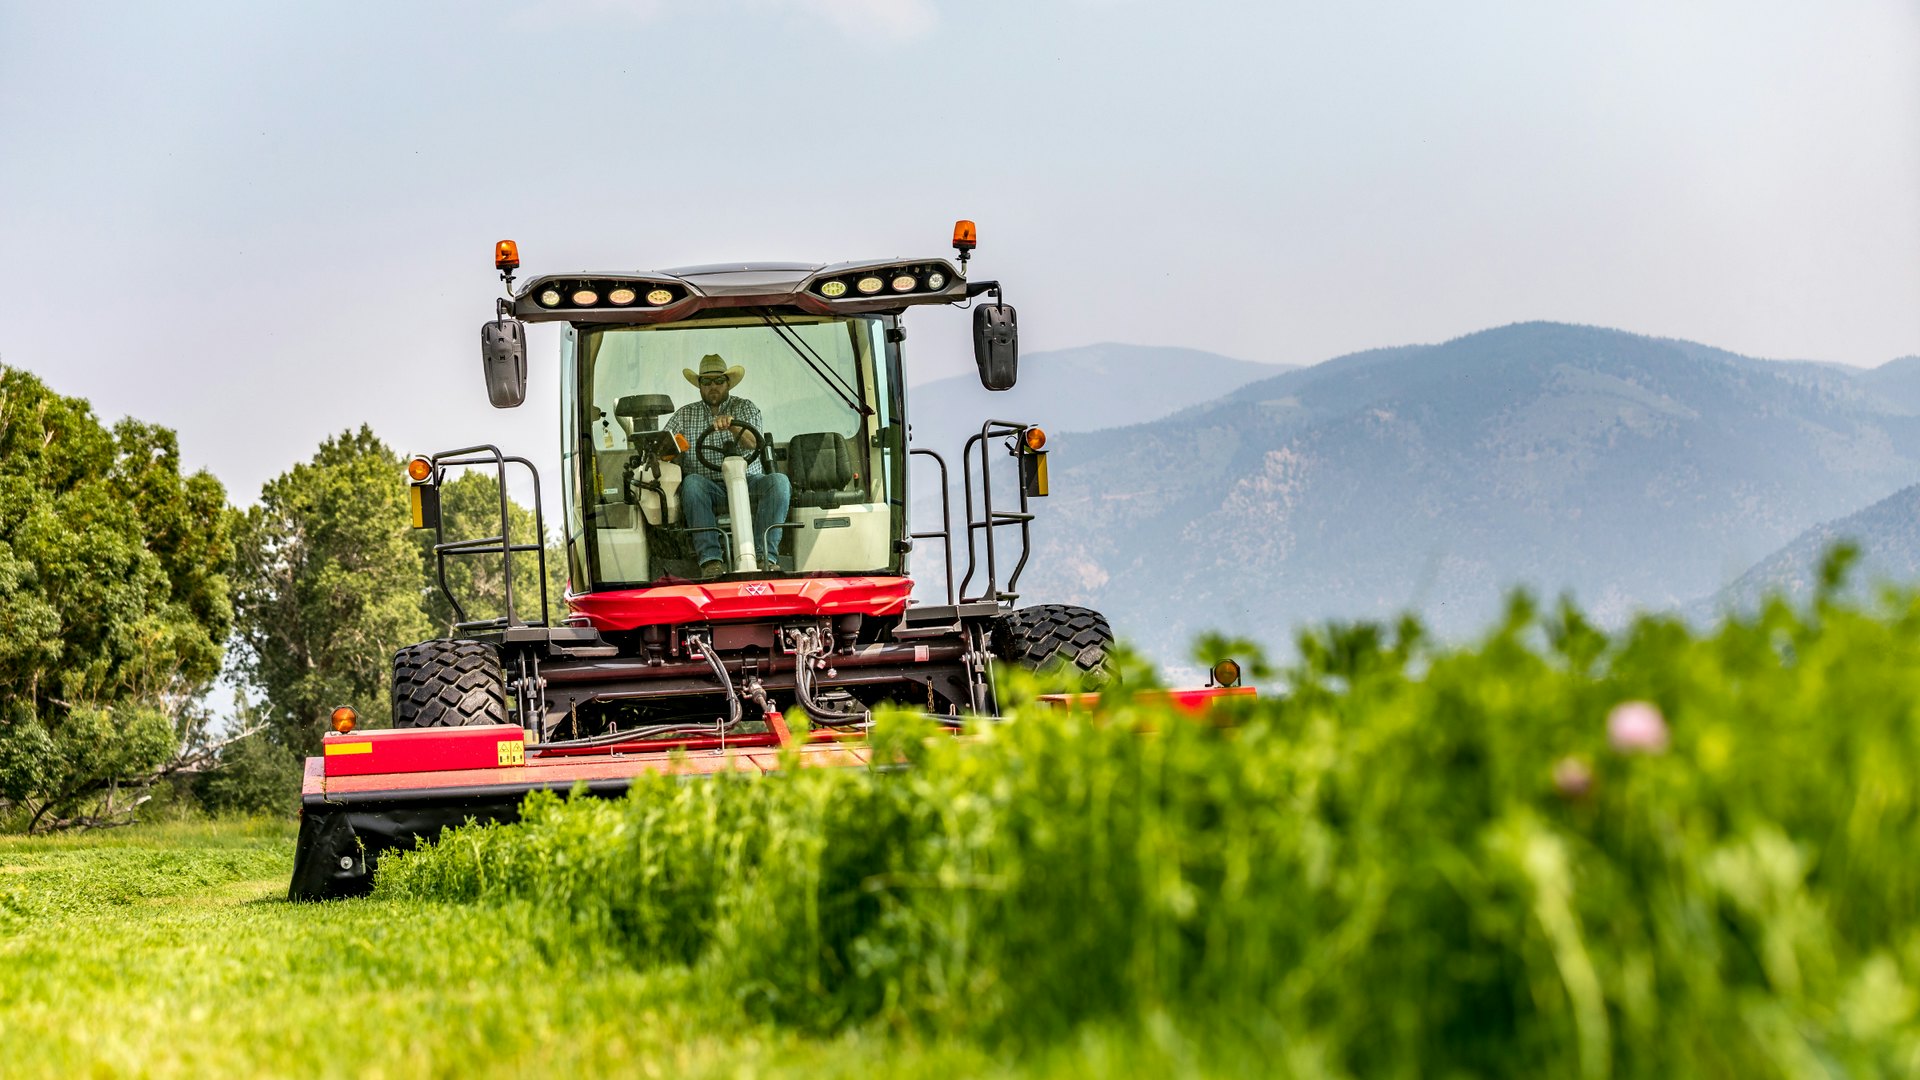 Massey Ferguson launches enhanced tractor customisation - Farmers